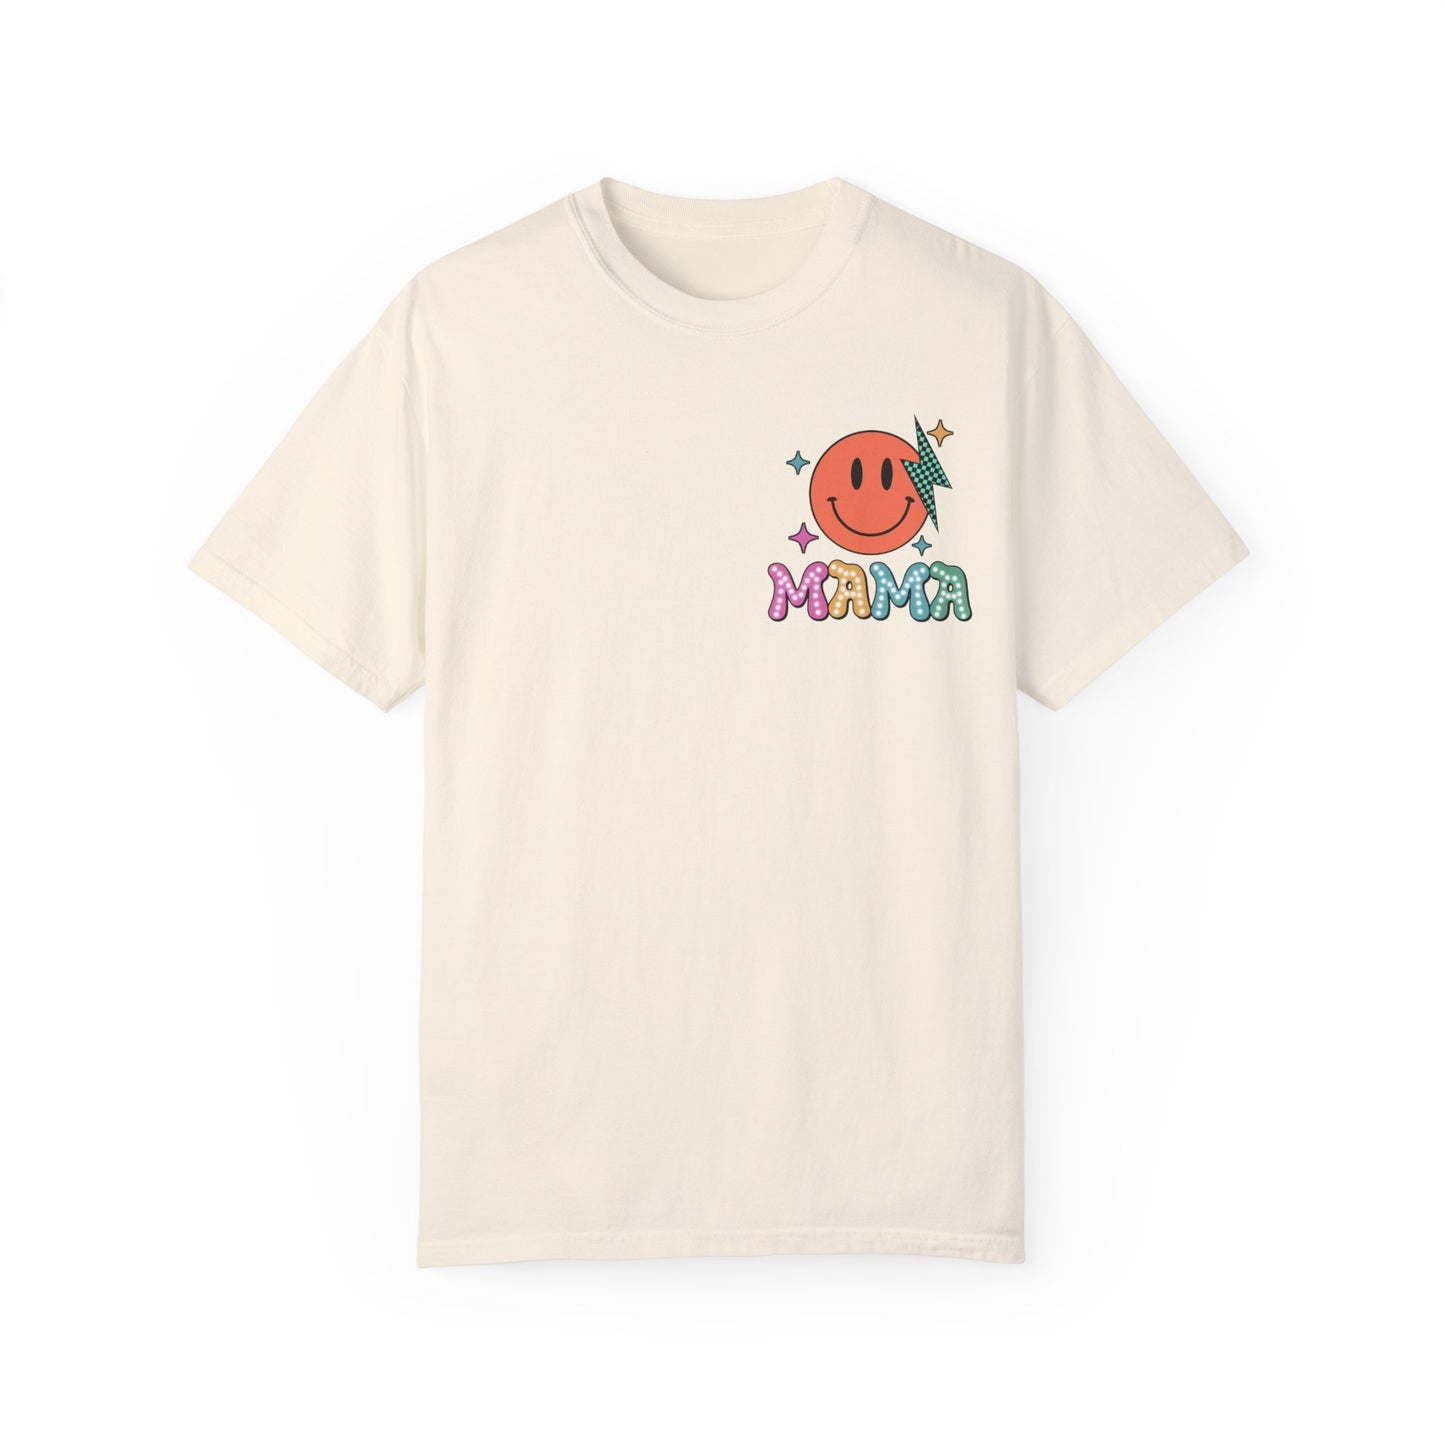 Mama It's Ok Front & Back Unisex Garment-Dyed T-shirt